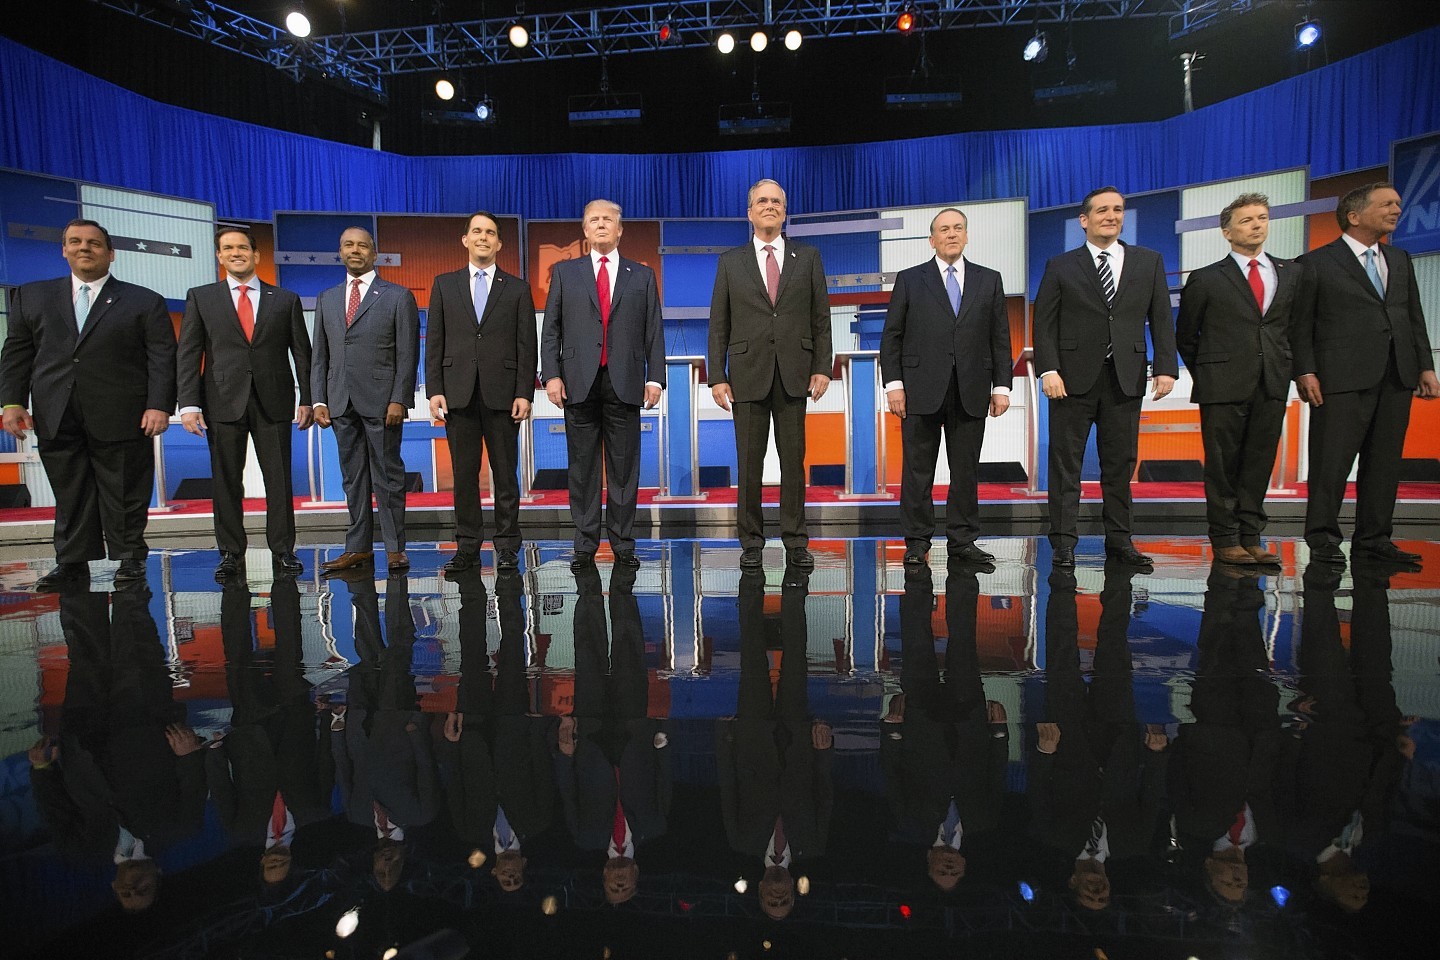 Republican presidential candidates from left, Chris Christie, Marco Rubio, Ben Carson, Scott Walker, Donald Trump, Jeb Bush, Mike Huckabee, Ted Cruz, Rand Paul, and John Kasich